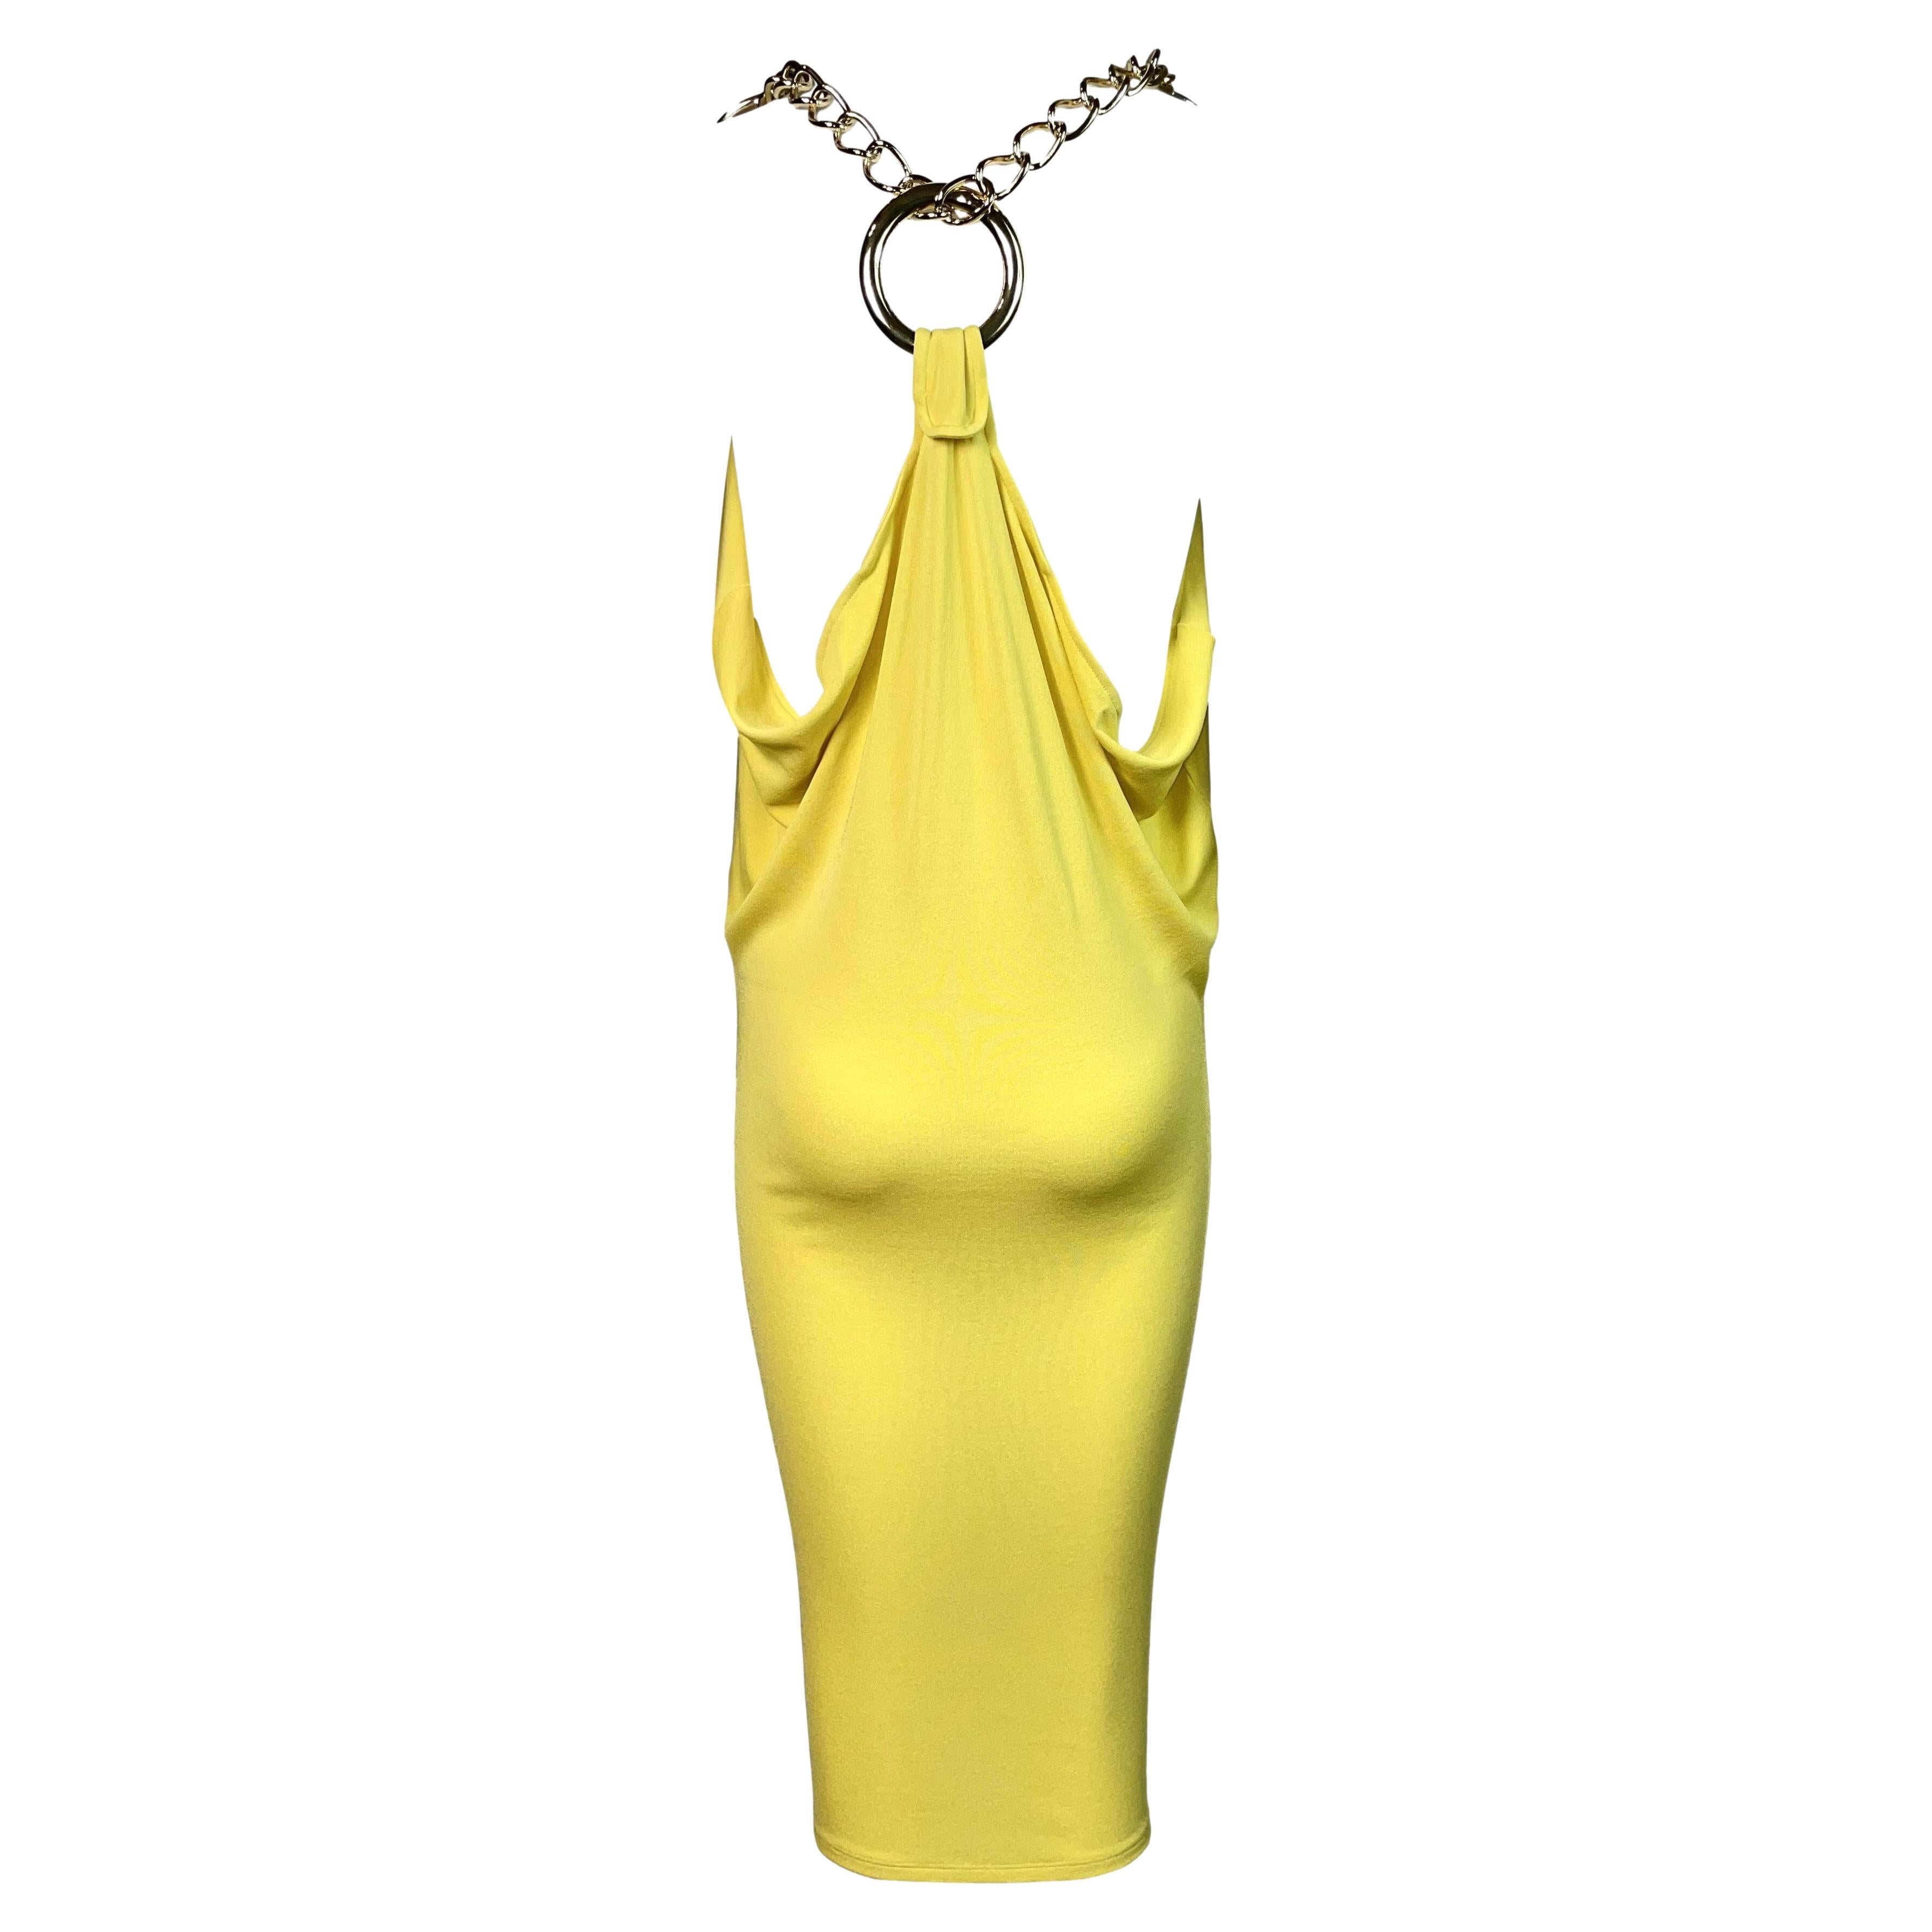 S/S 2005 Roberto Cavalli Gold Chain Straps Yellow Bodycon Dress For Sale